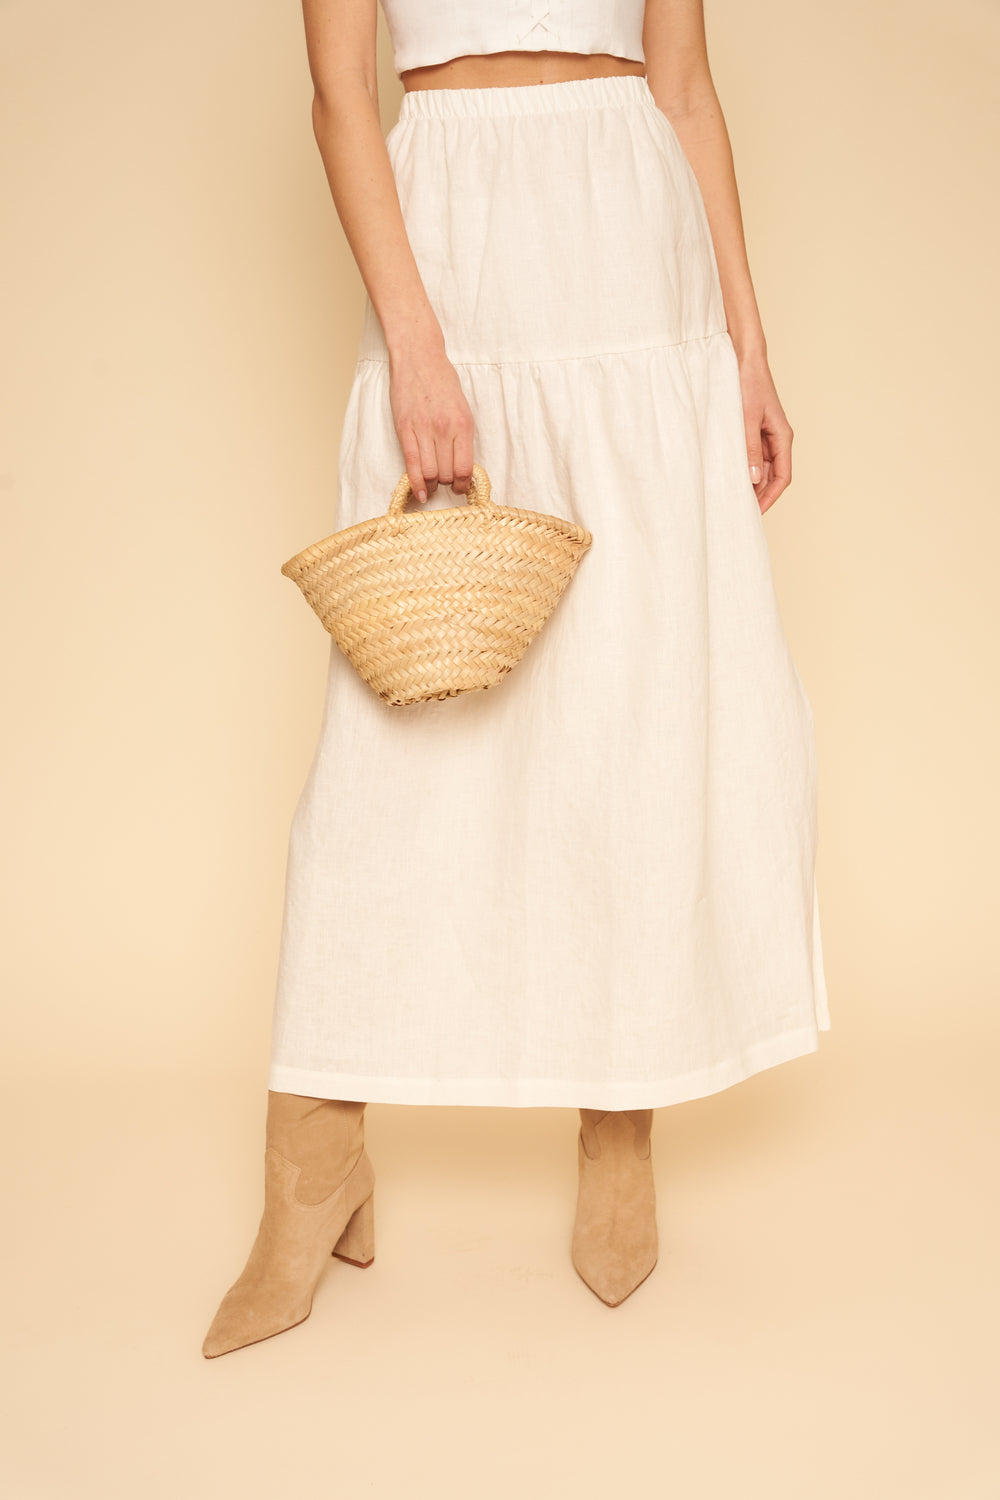 Millie Skirt/Dress in Coconut - Whimsy & Row